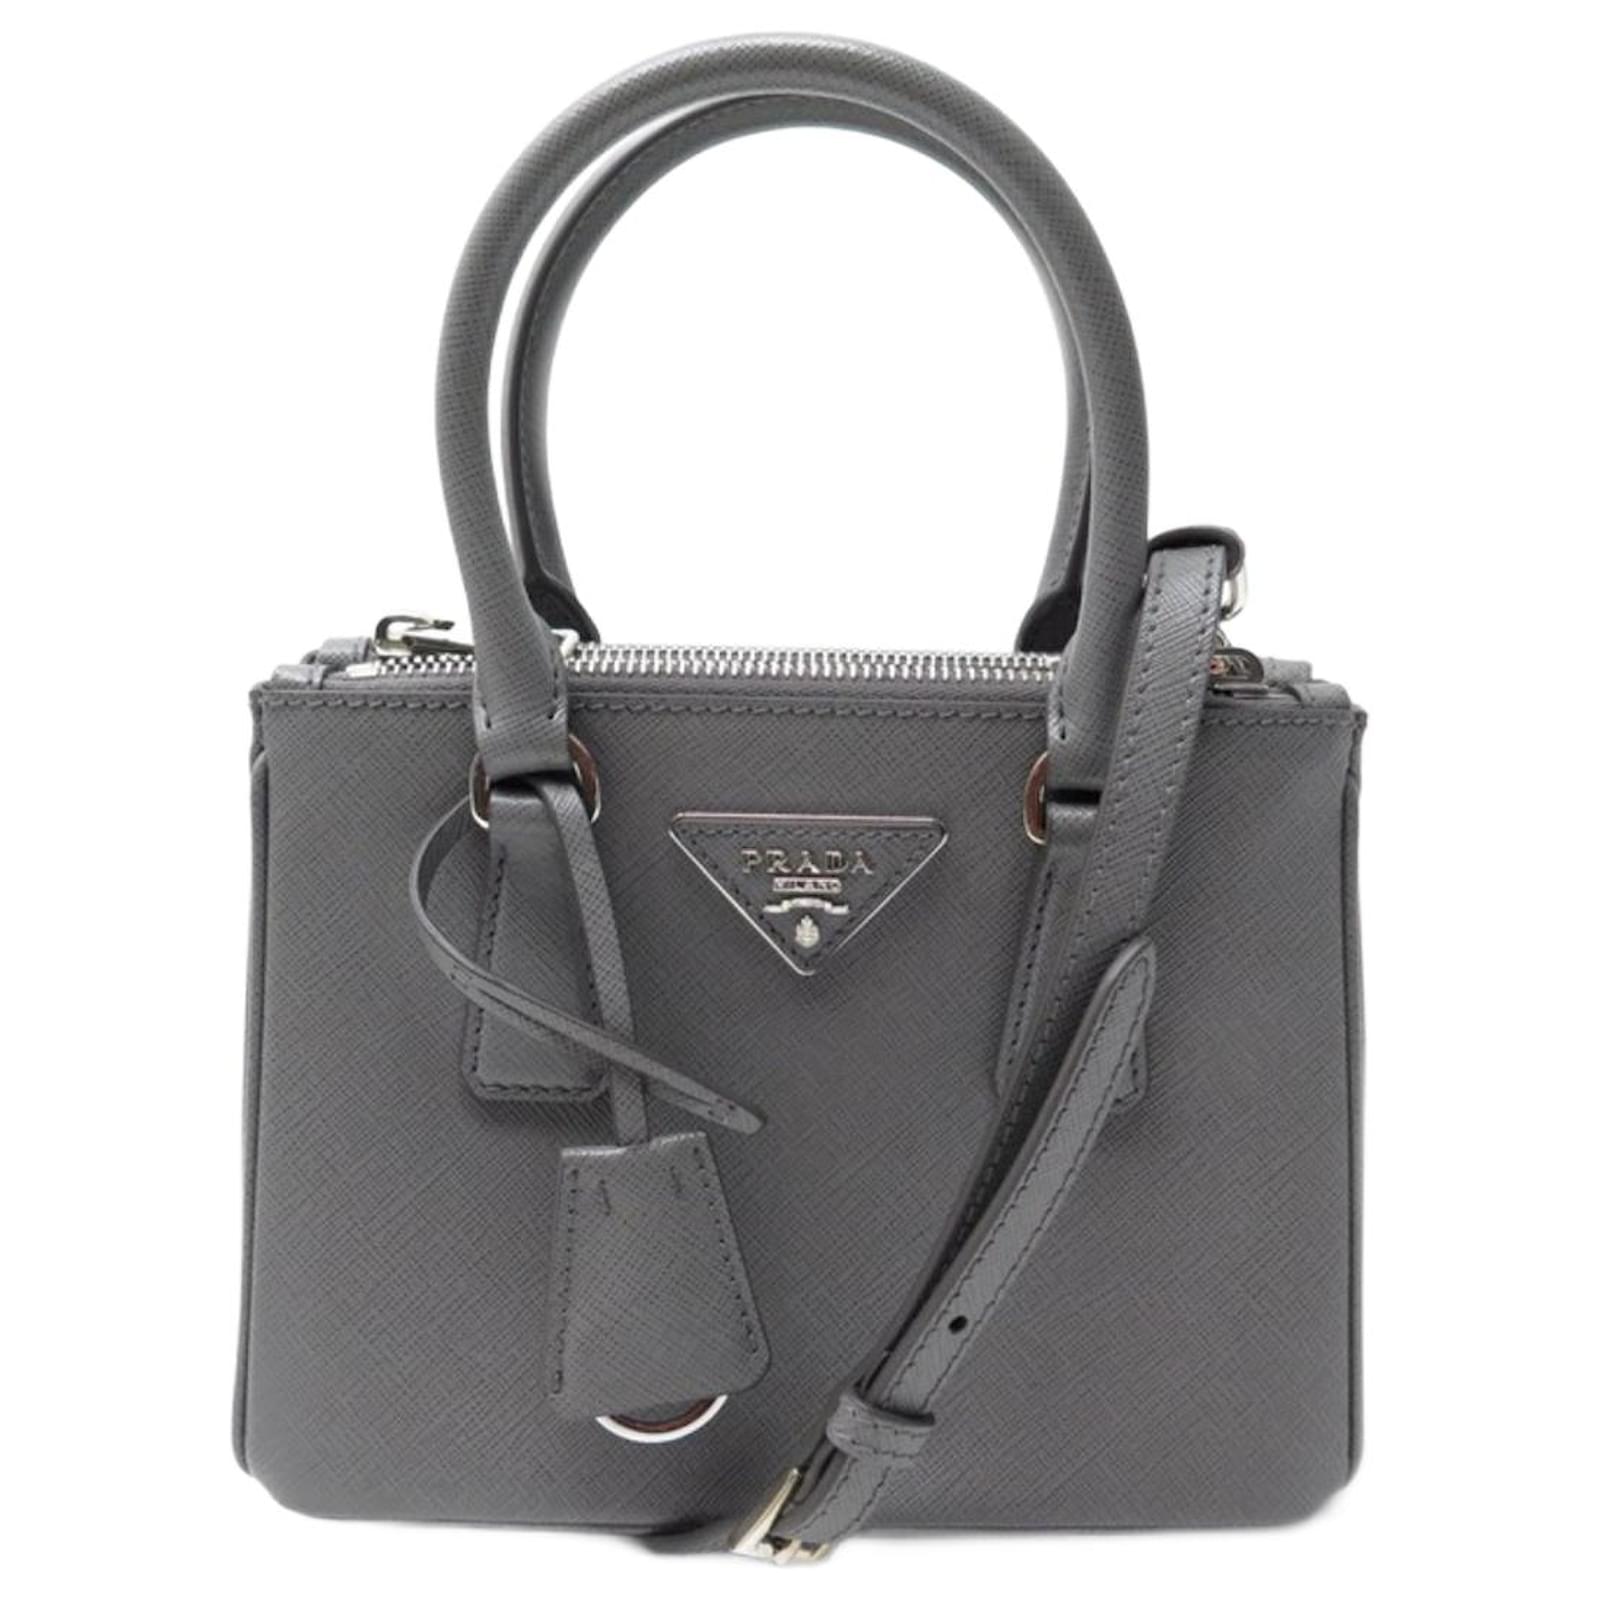 Galleria Saffiano leather mini bag | Prada 